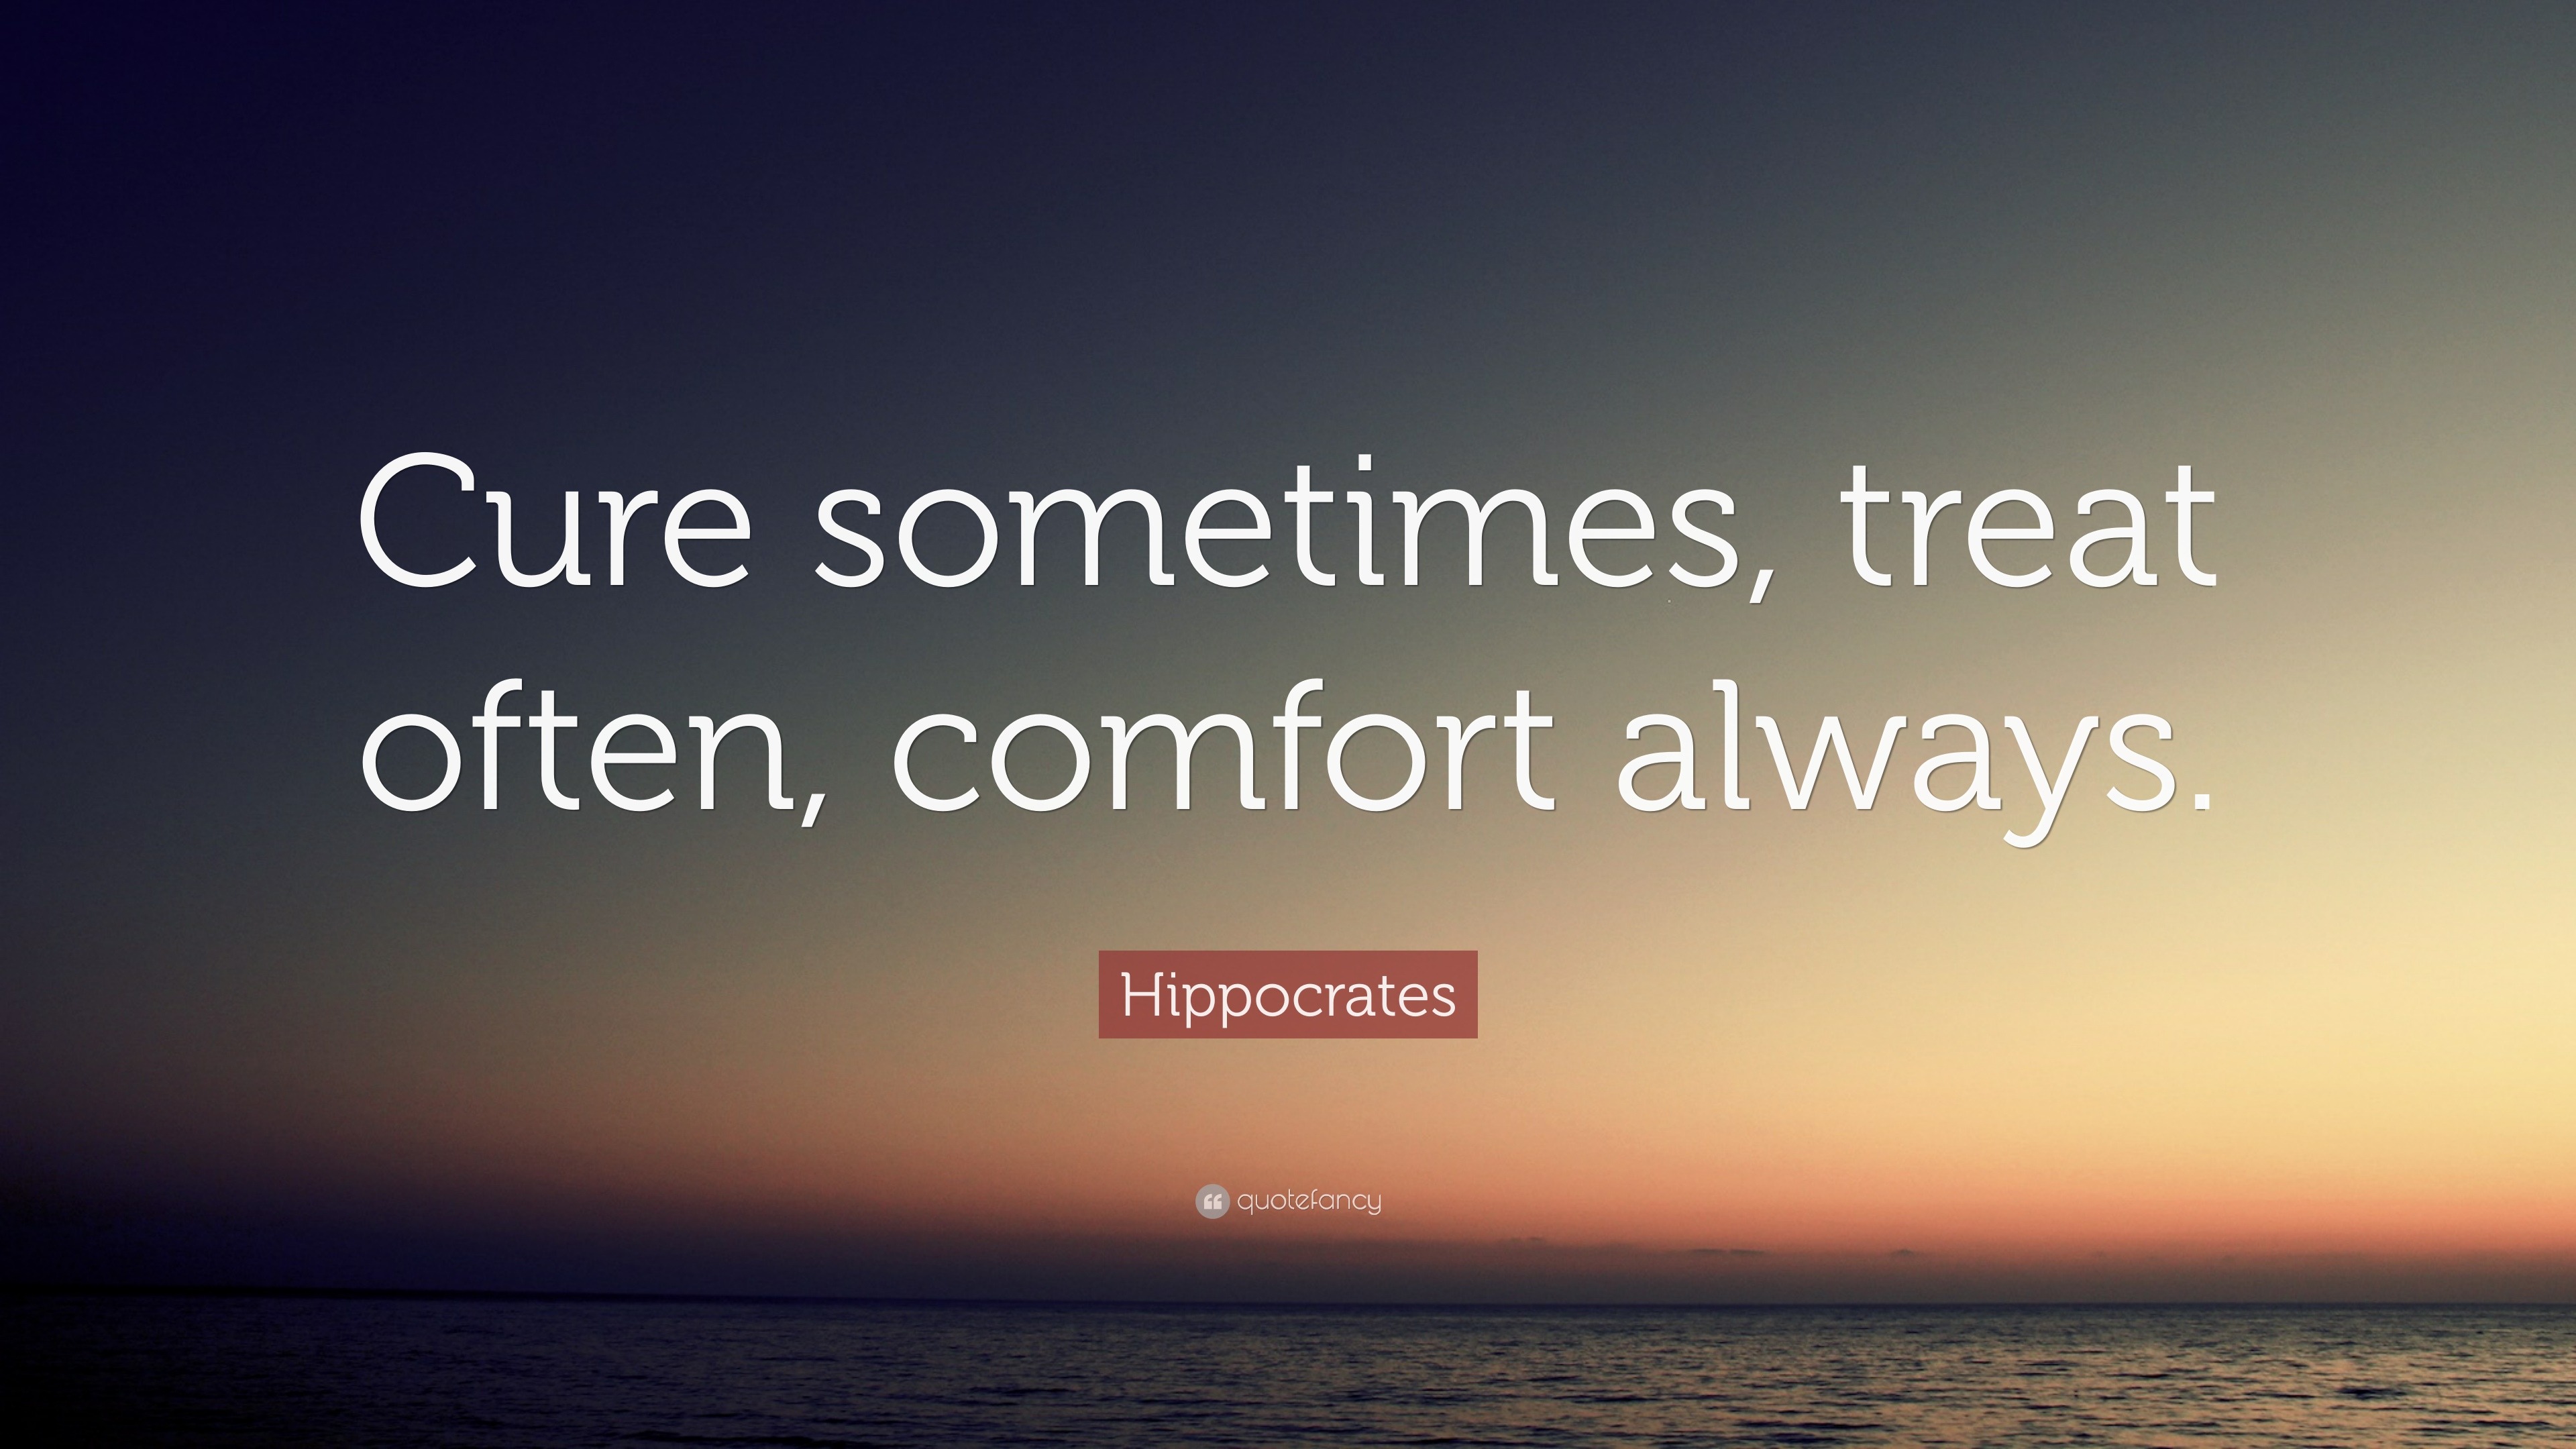 Hippocrates Quote: “Cure sometimes, treat often, comfort always.” (12